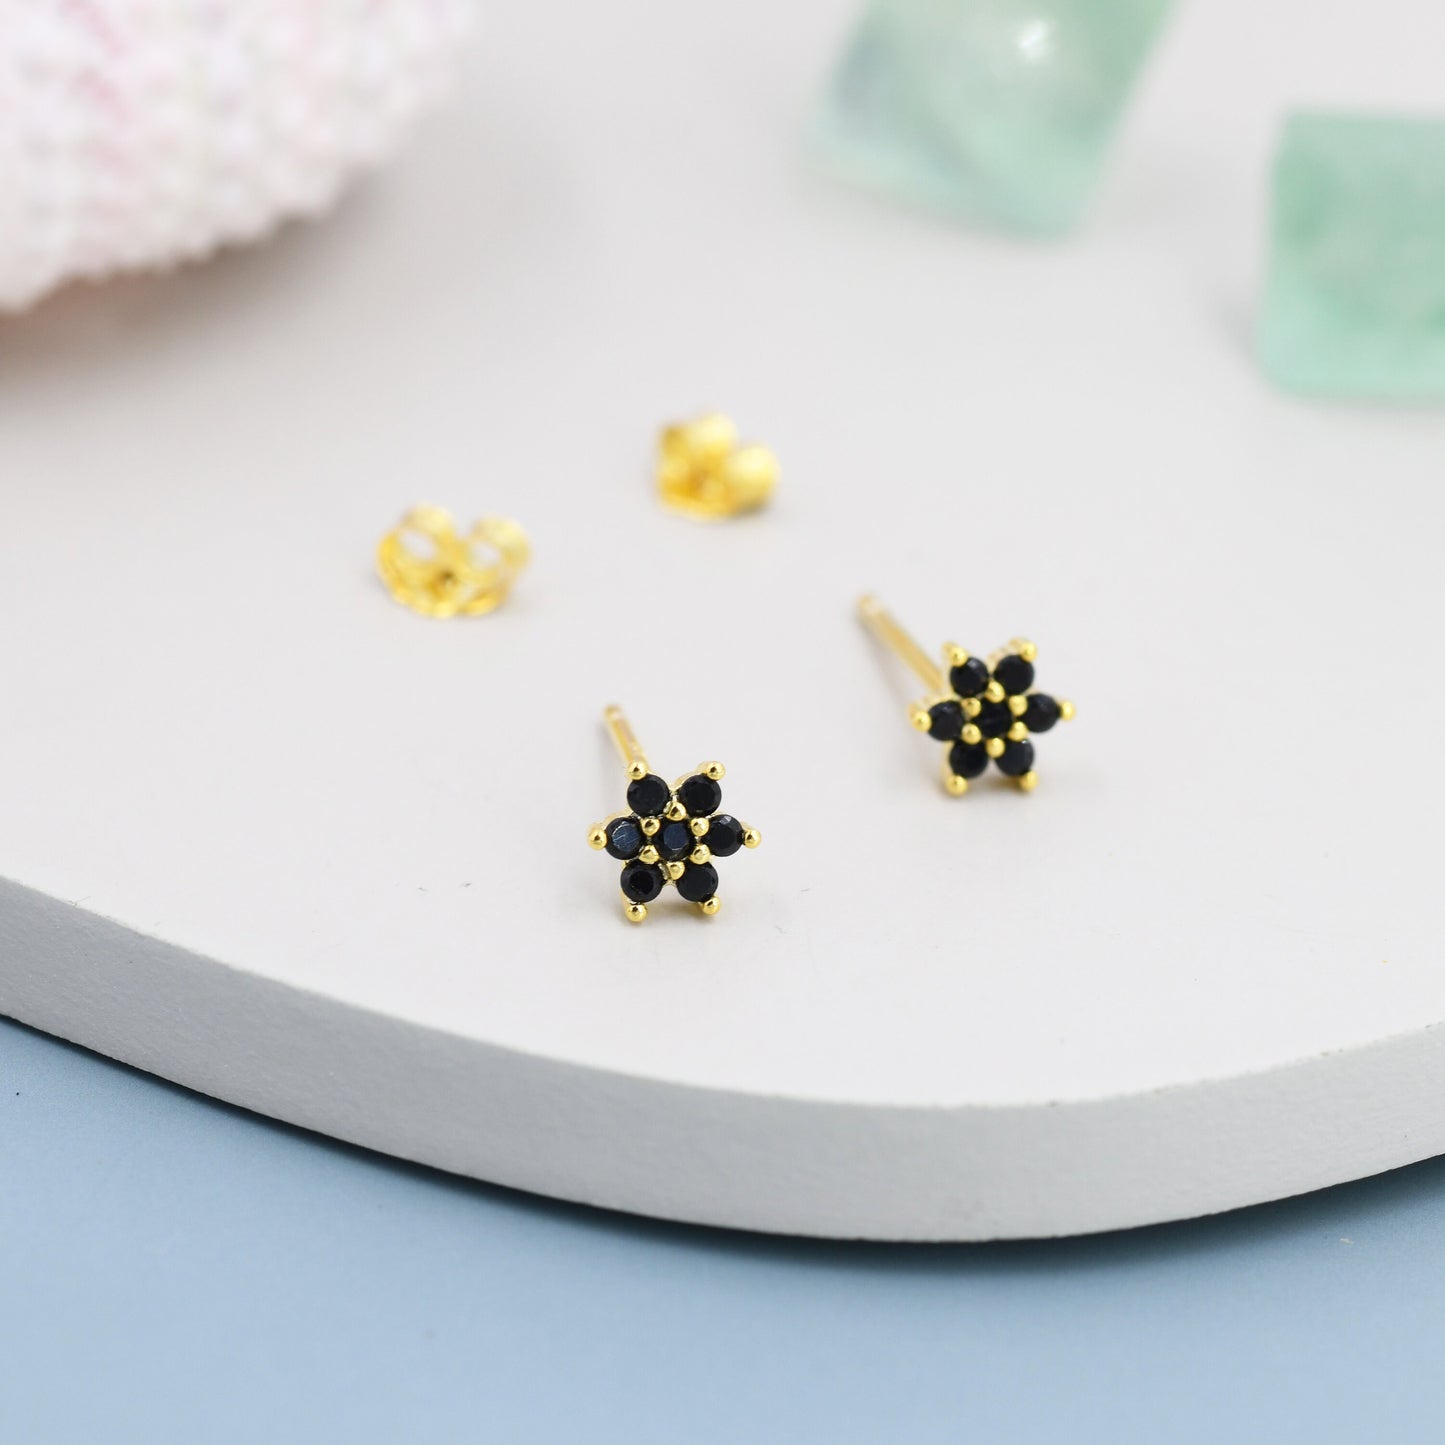 Pair of Very Tiny Black CZ Flower Stud Earrings in Sterling Silver, Silver or Gold, Crystal Flower Earrings, Stacking Earrings